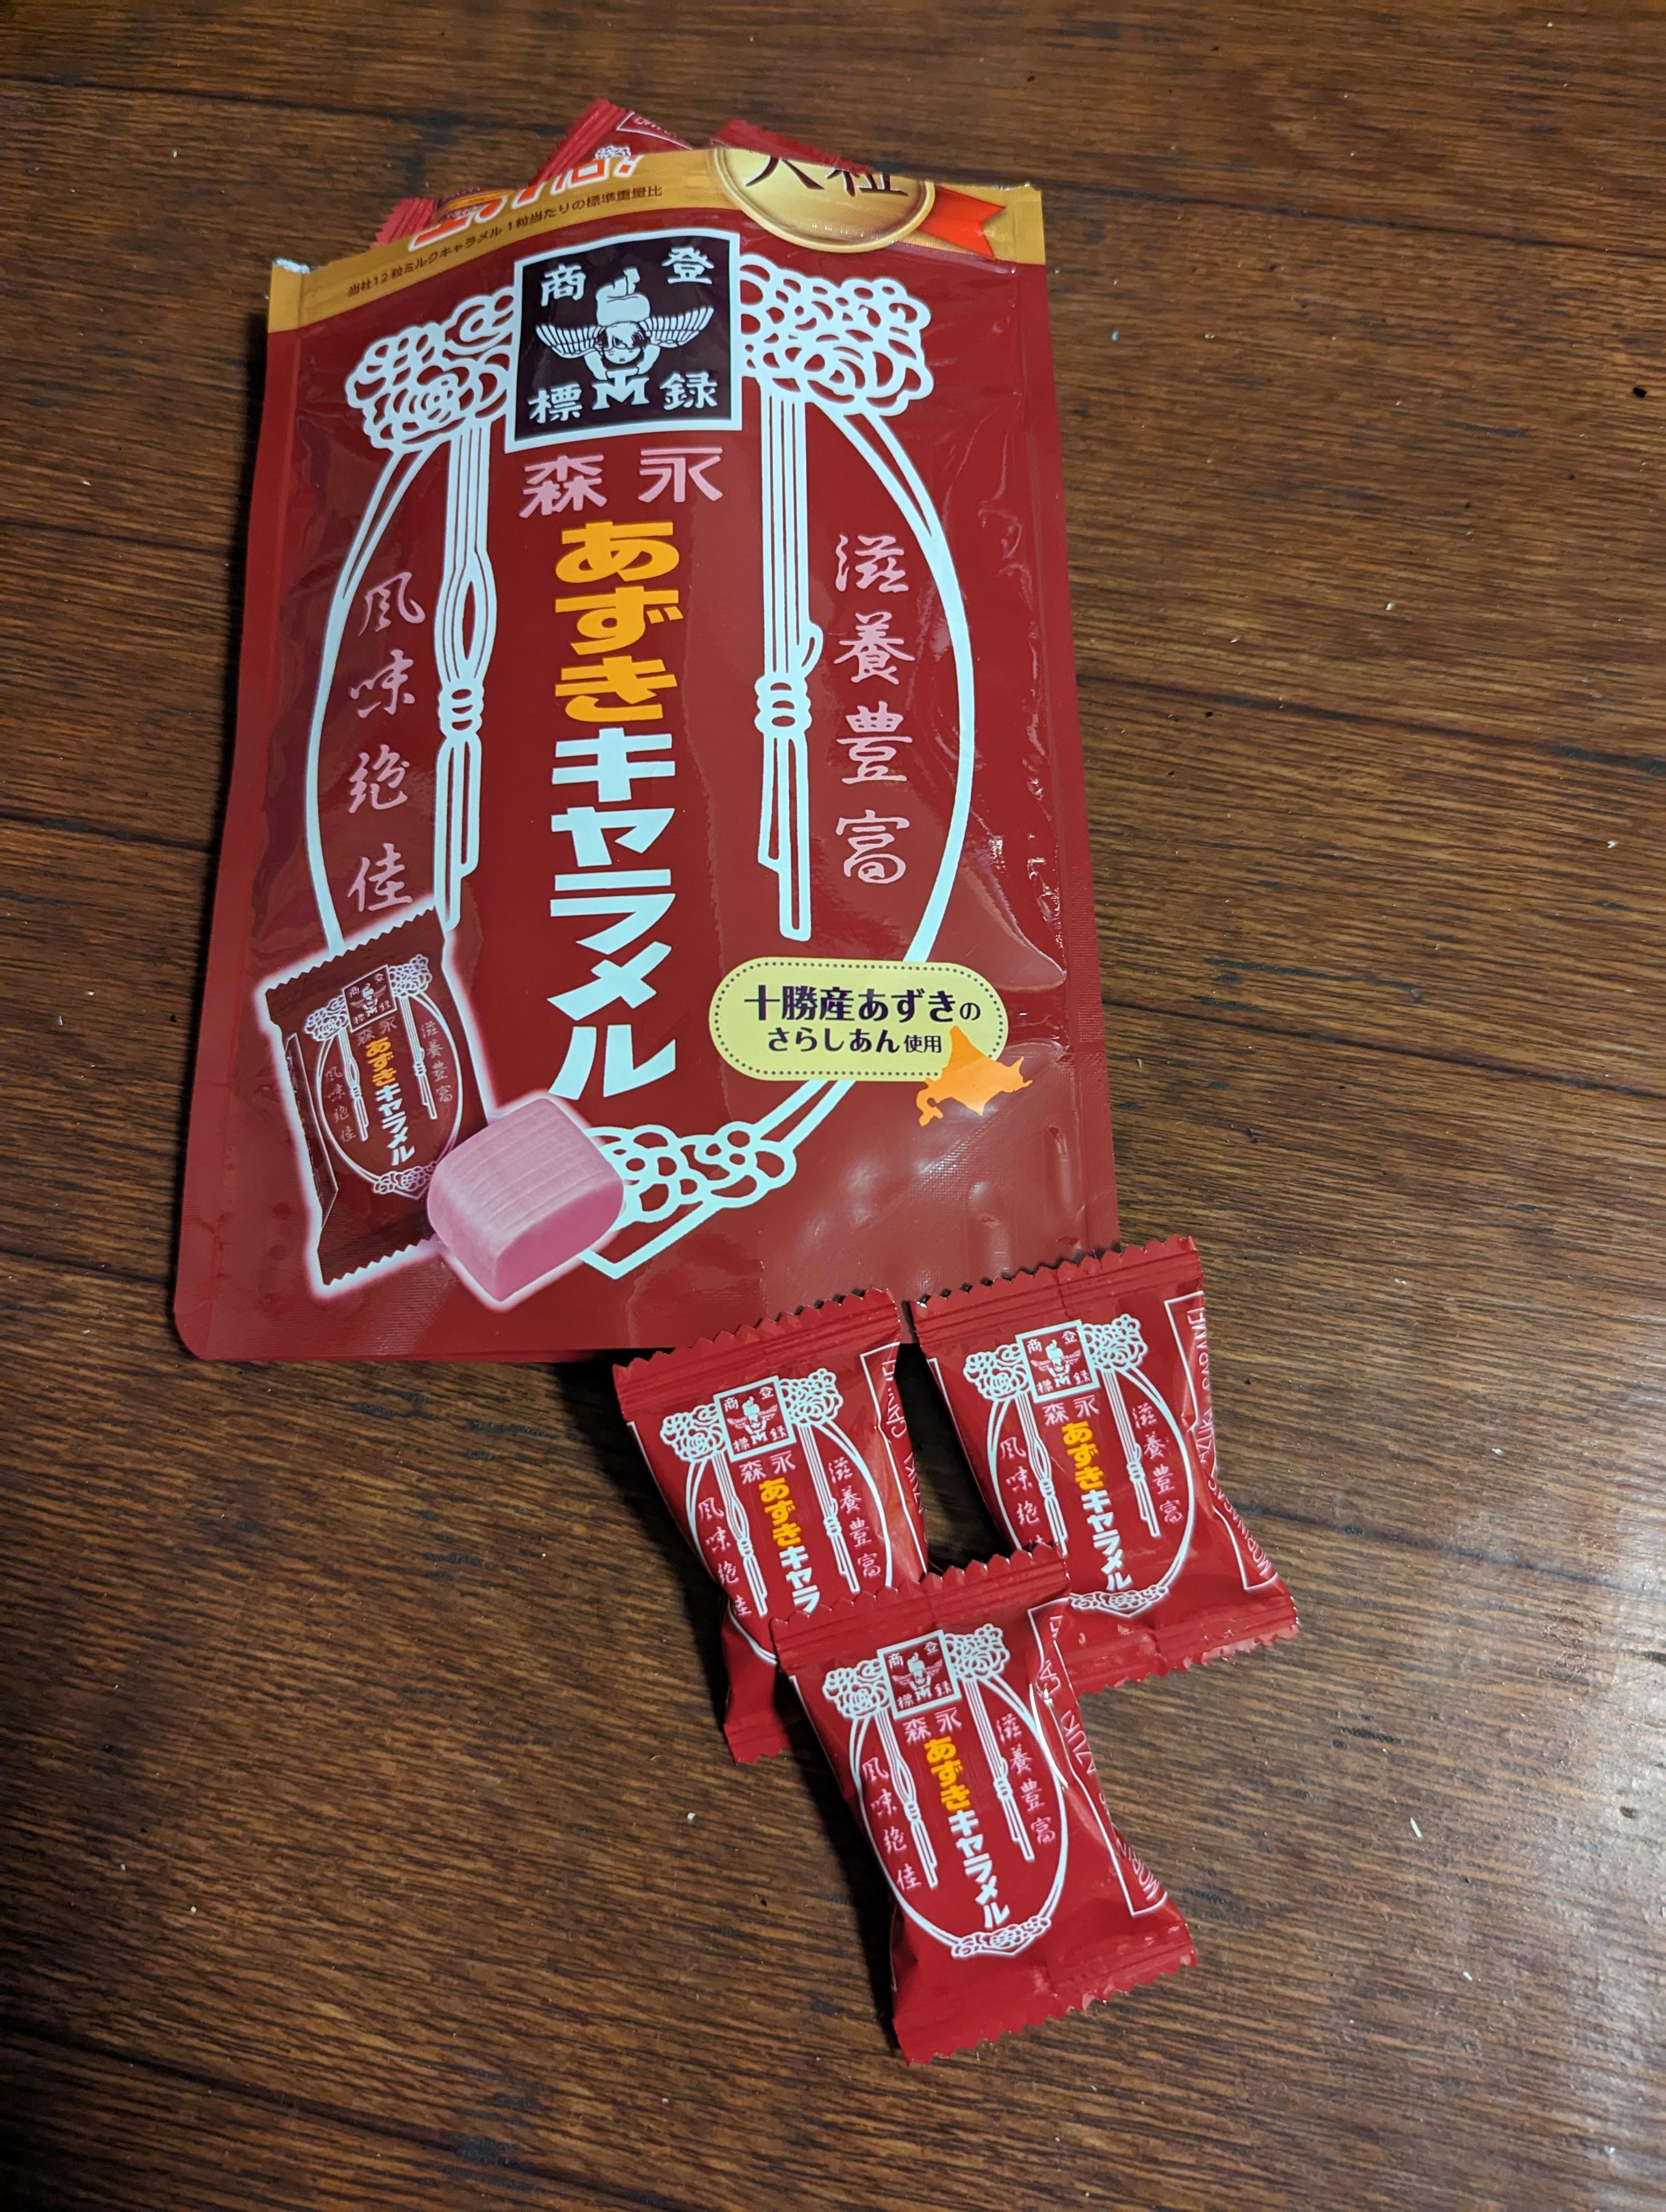 LOHACO - あずきキャラメル大粒 3袋 森永製菓